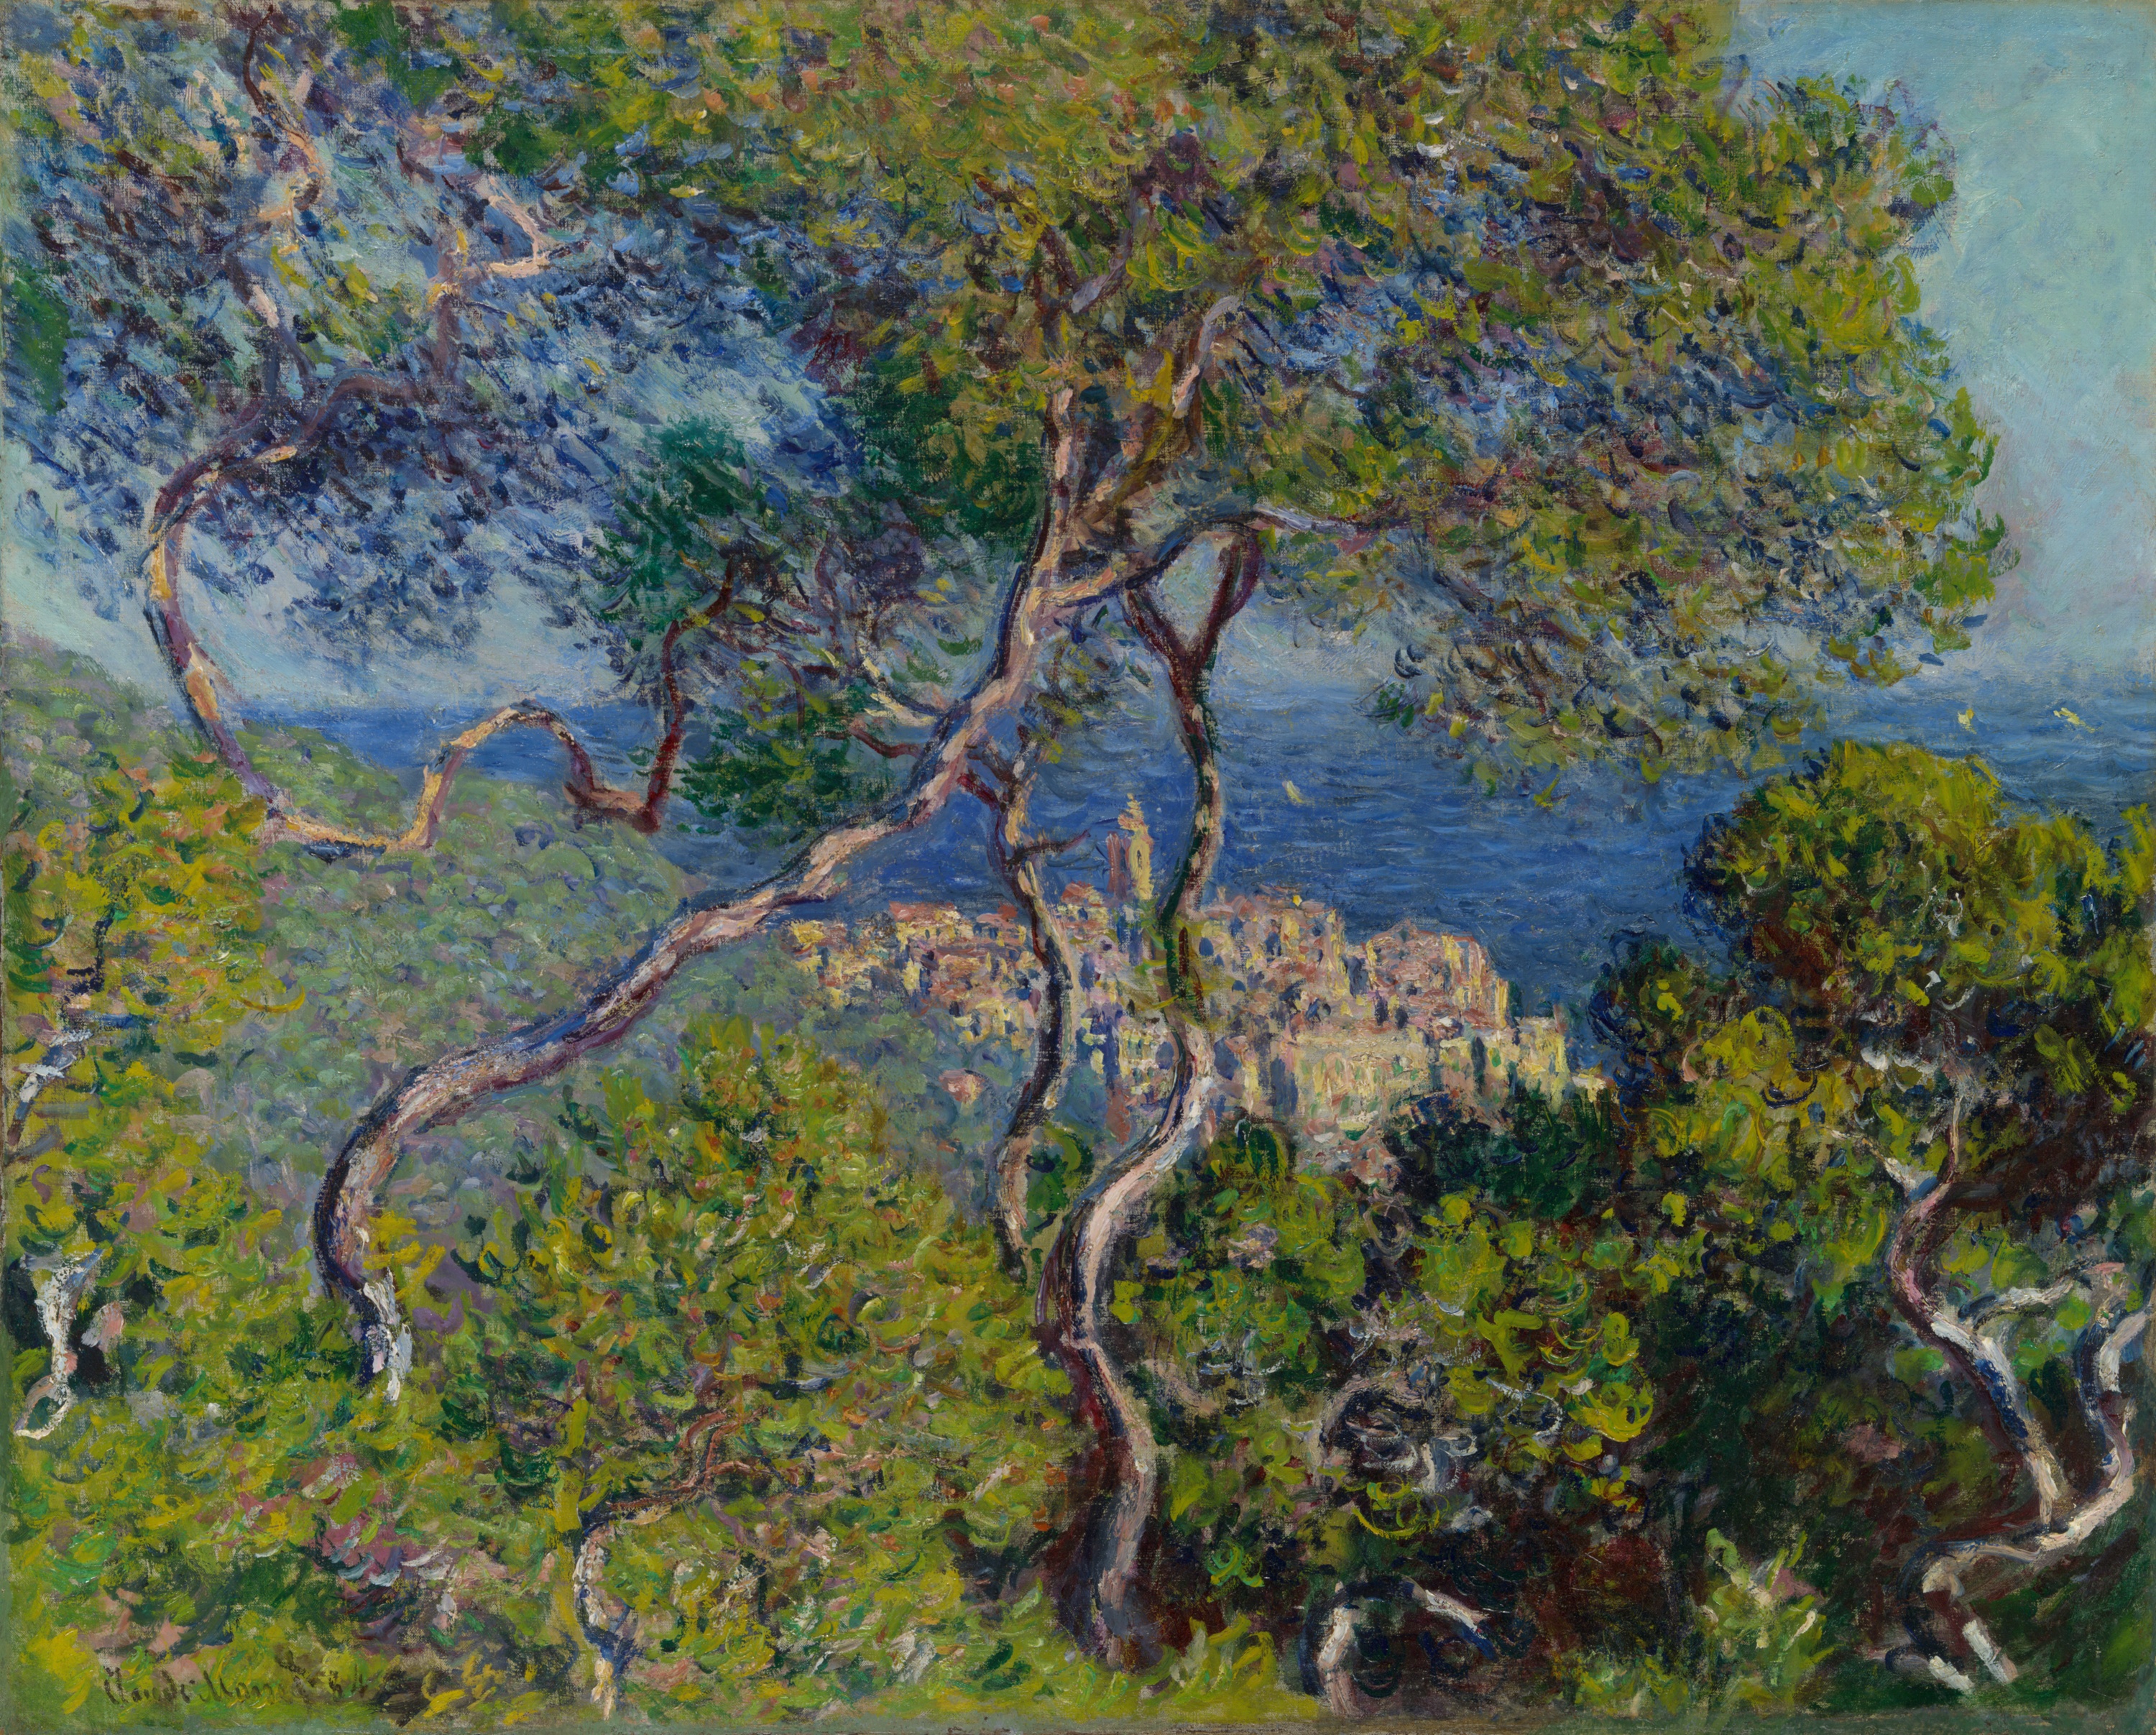 Бордигера by Claude Monet - 1884 г. - 65 × 80.8 см 